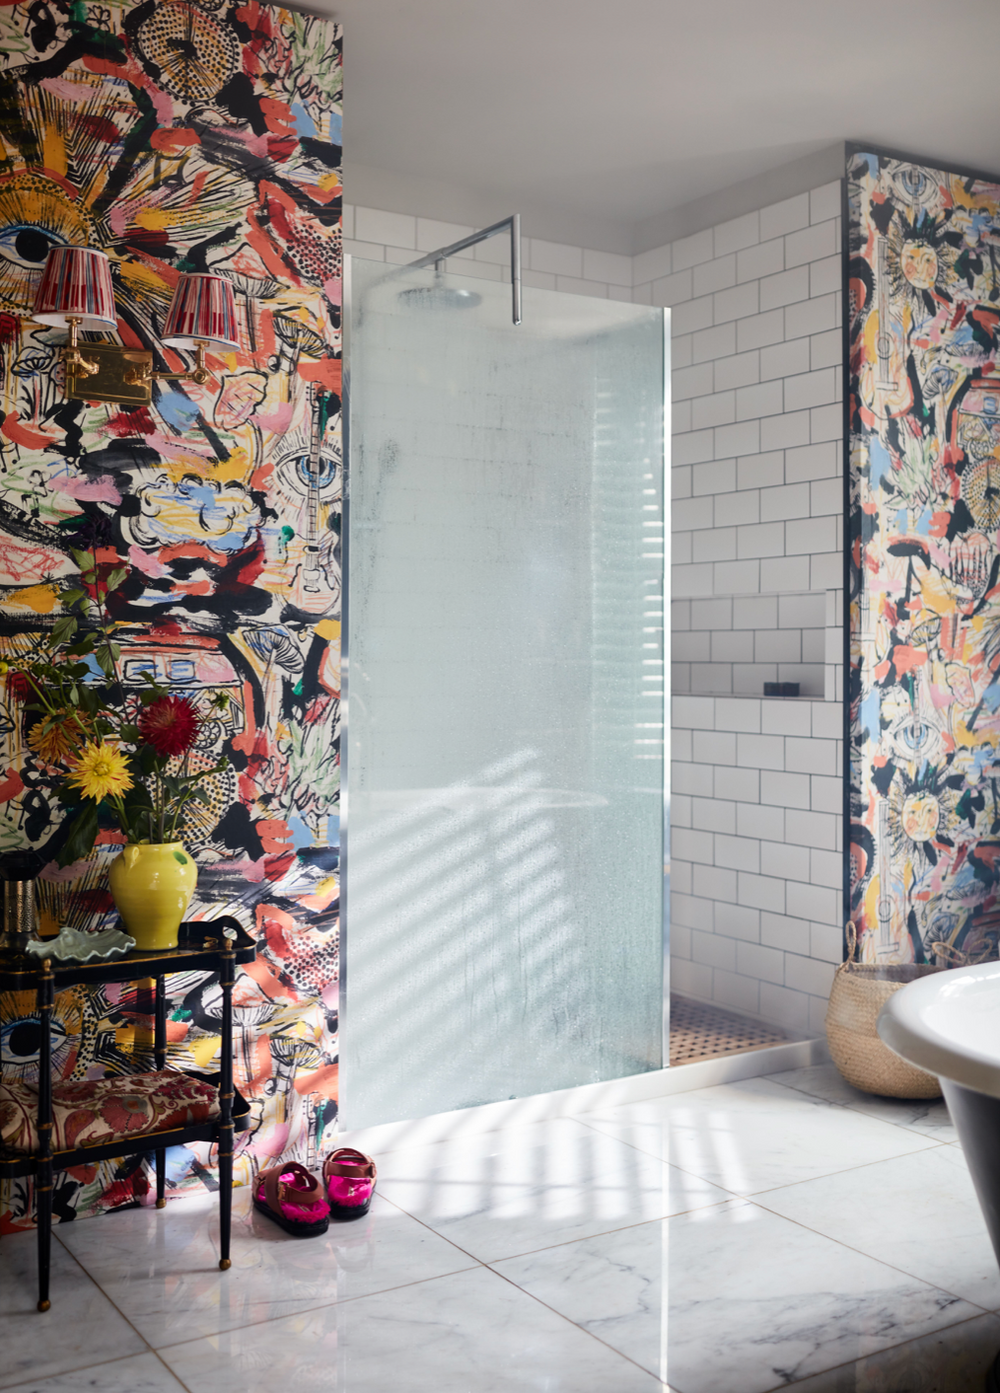 mind-the-gap-woodsrock-collection-summer-of-69-retro-wallpaper-illustrative-drawing-shower-room-bathroom